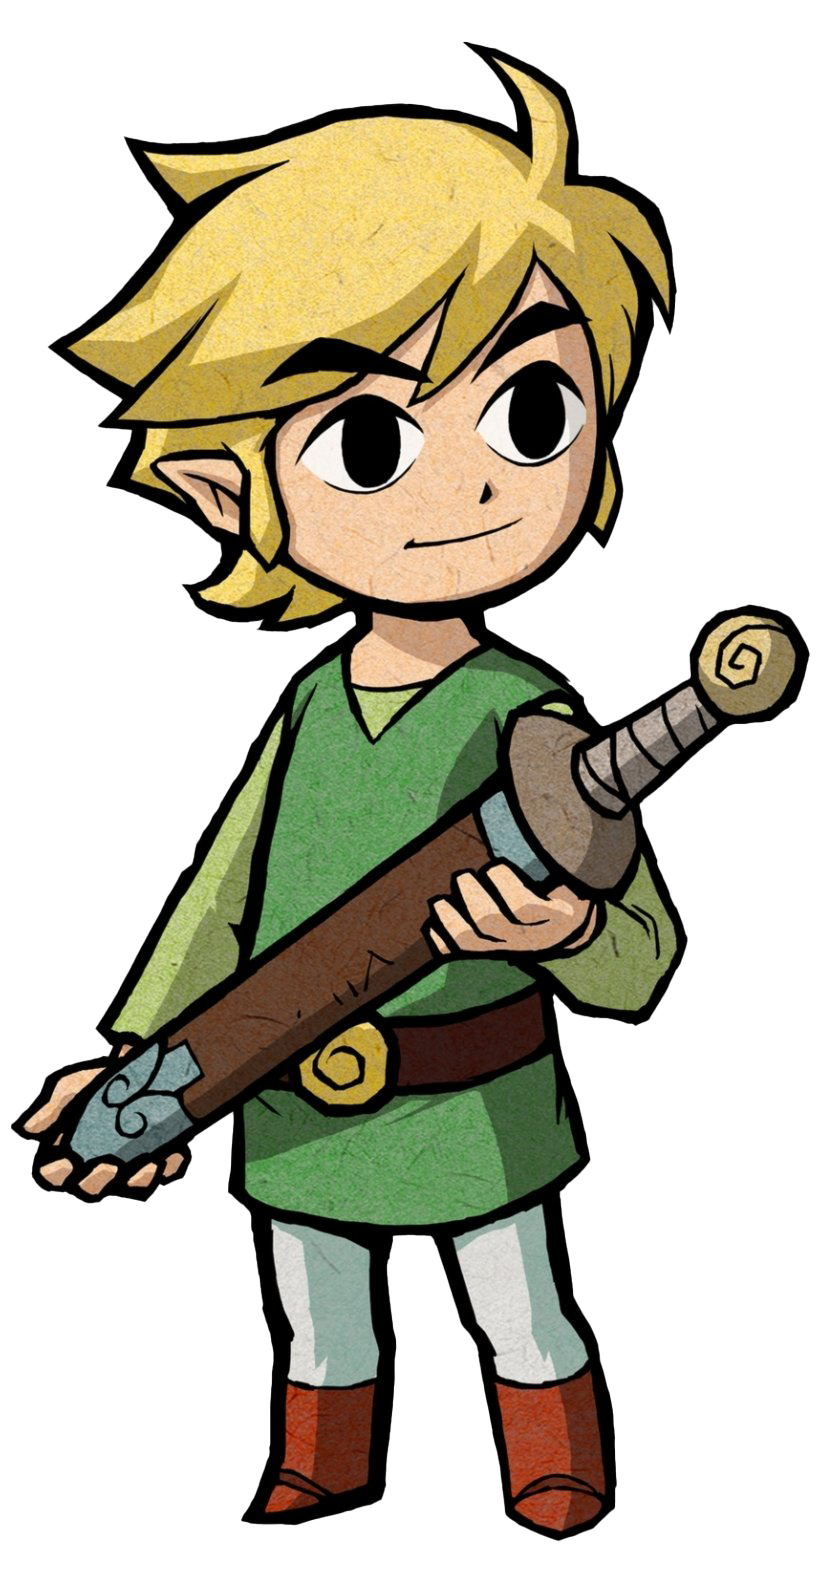 La légende du fichier PNG de Zelda Link